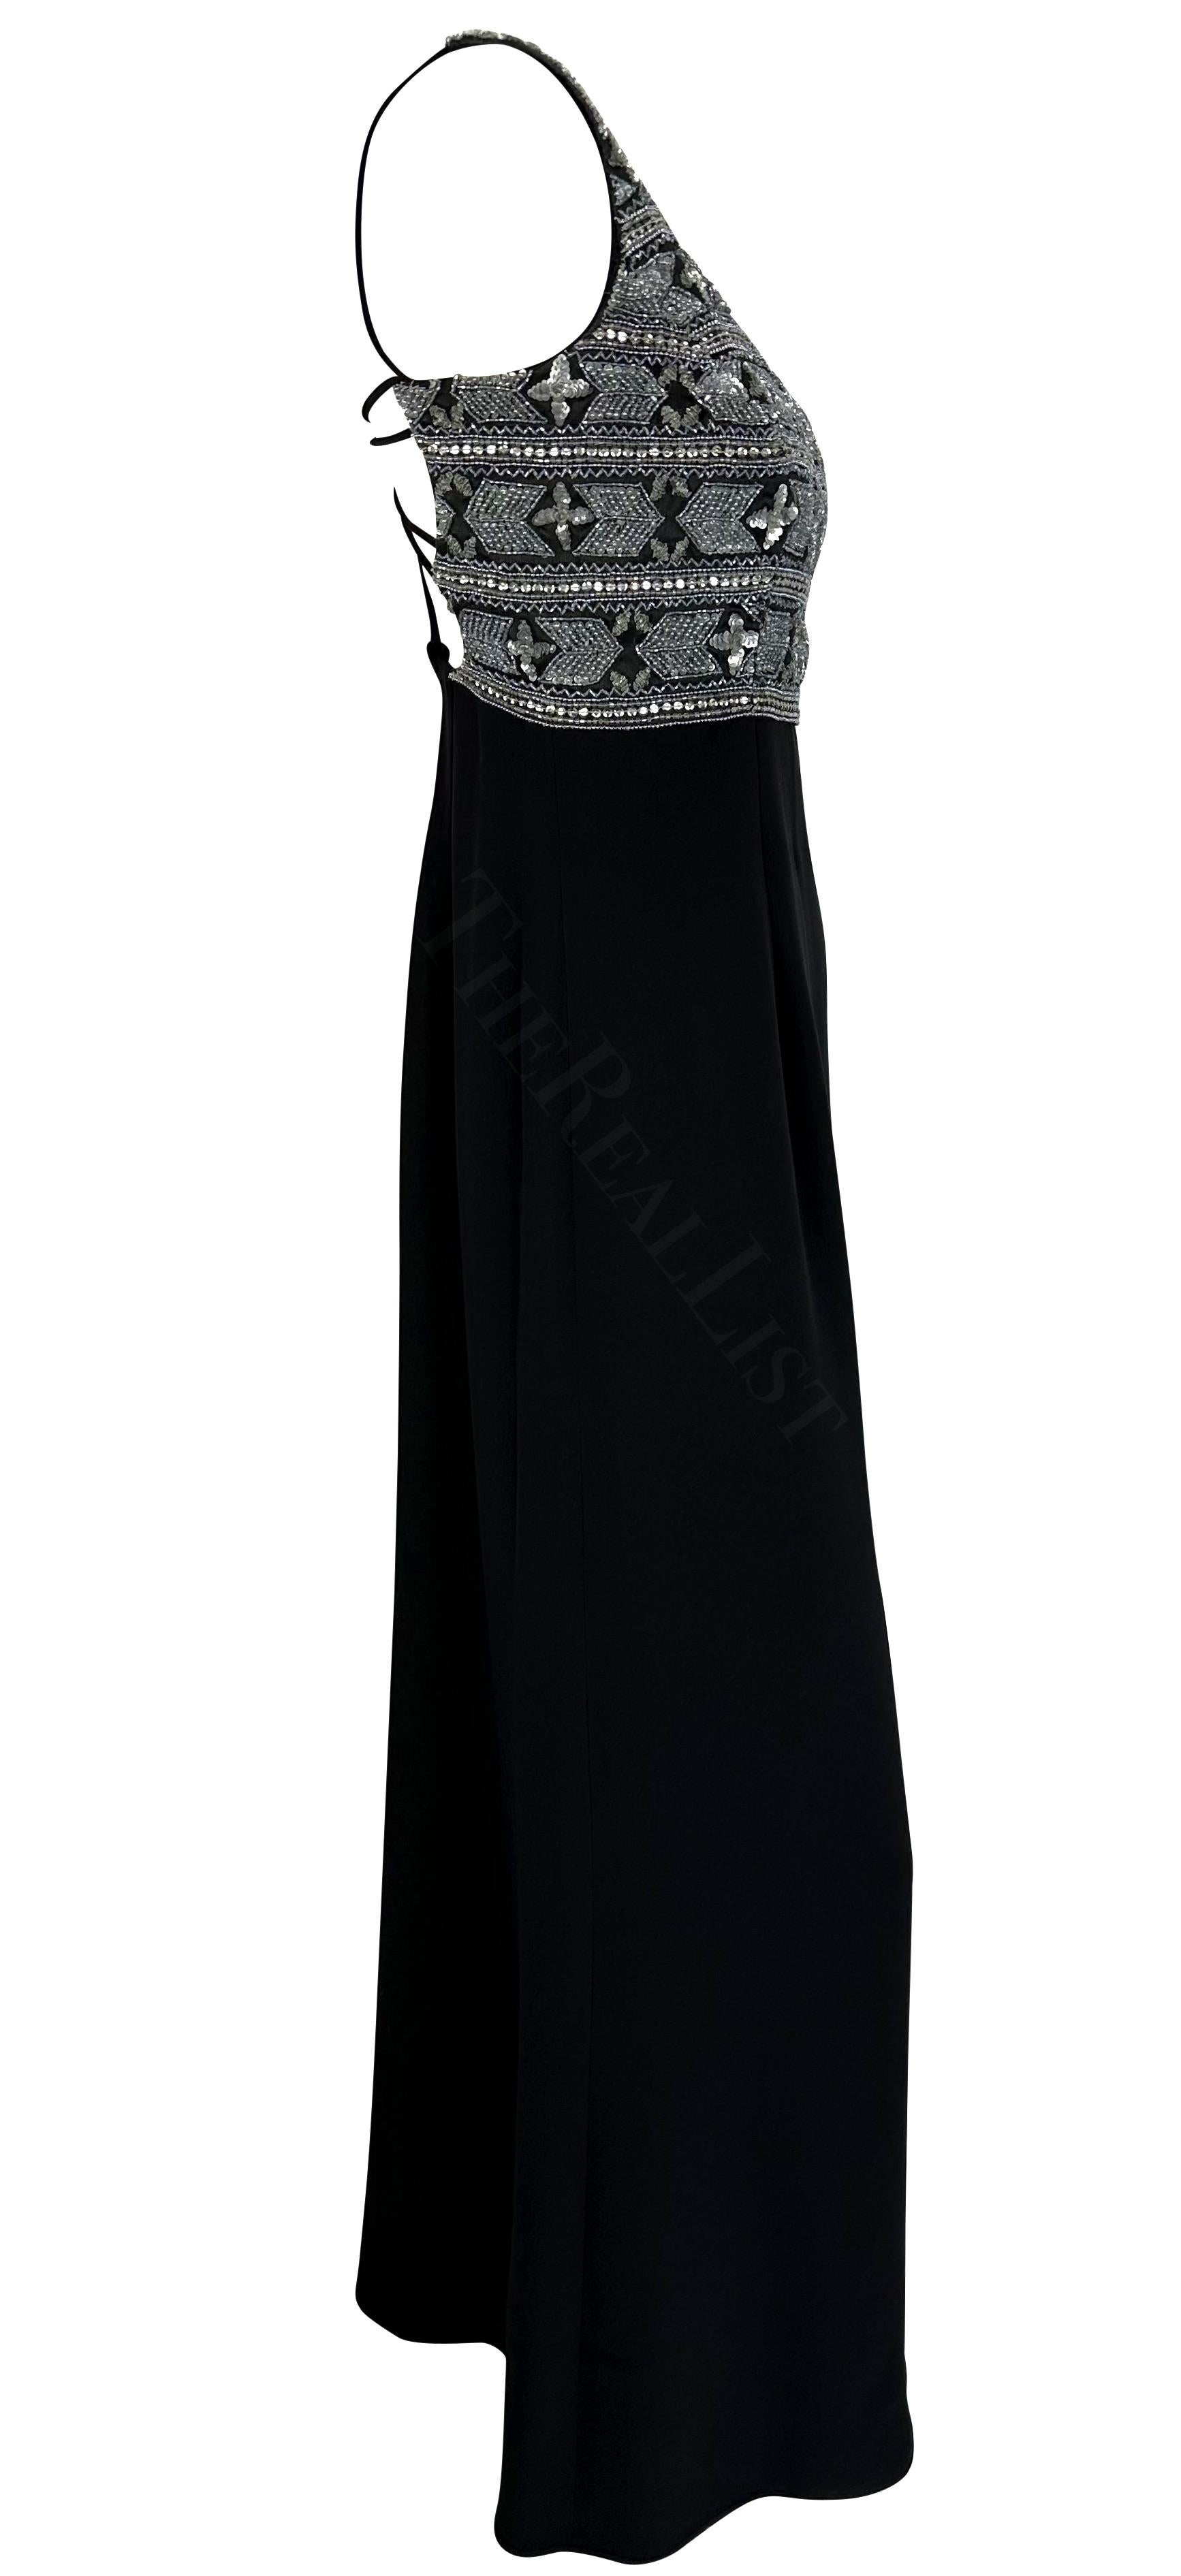 S/S 1996 Giorgio Armani Backless Black Silver Beaded Dress For Sale 5